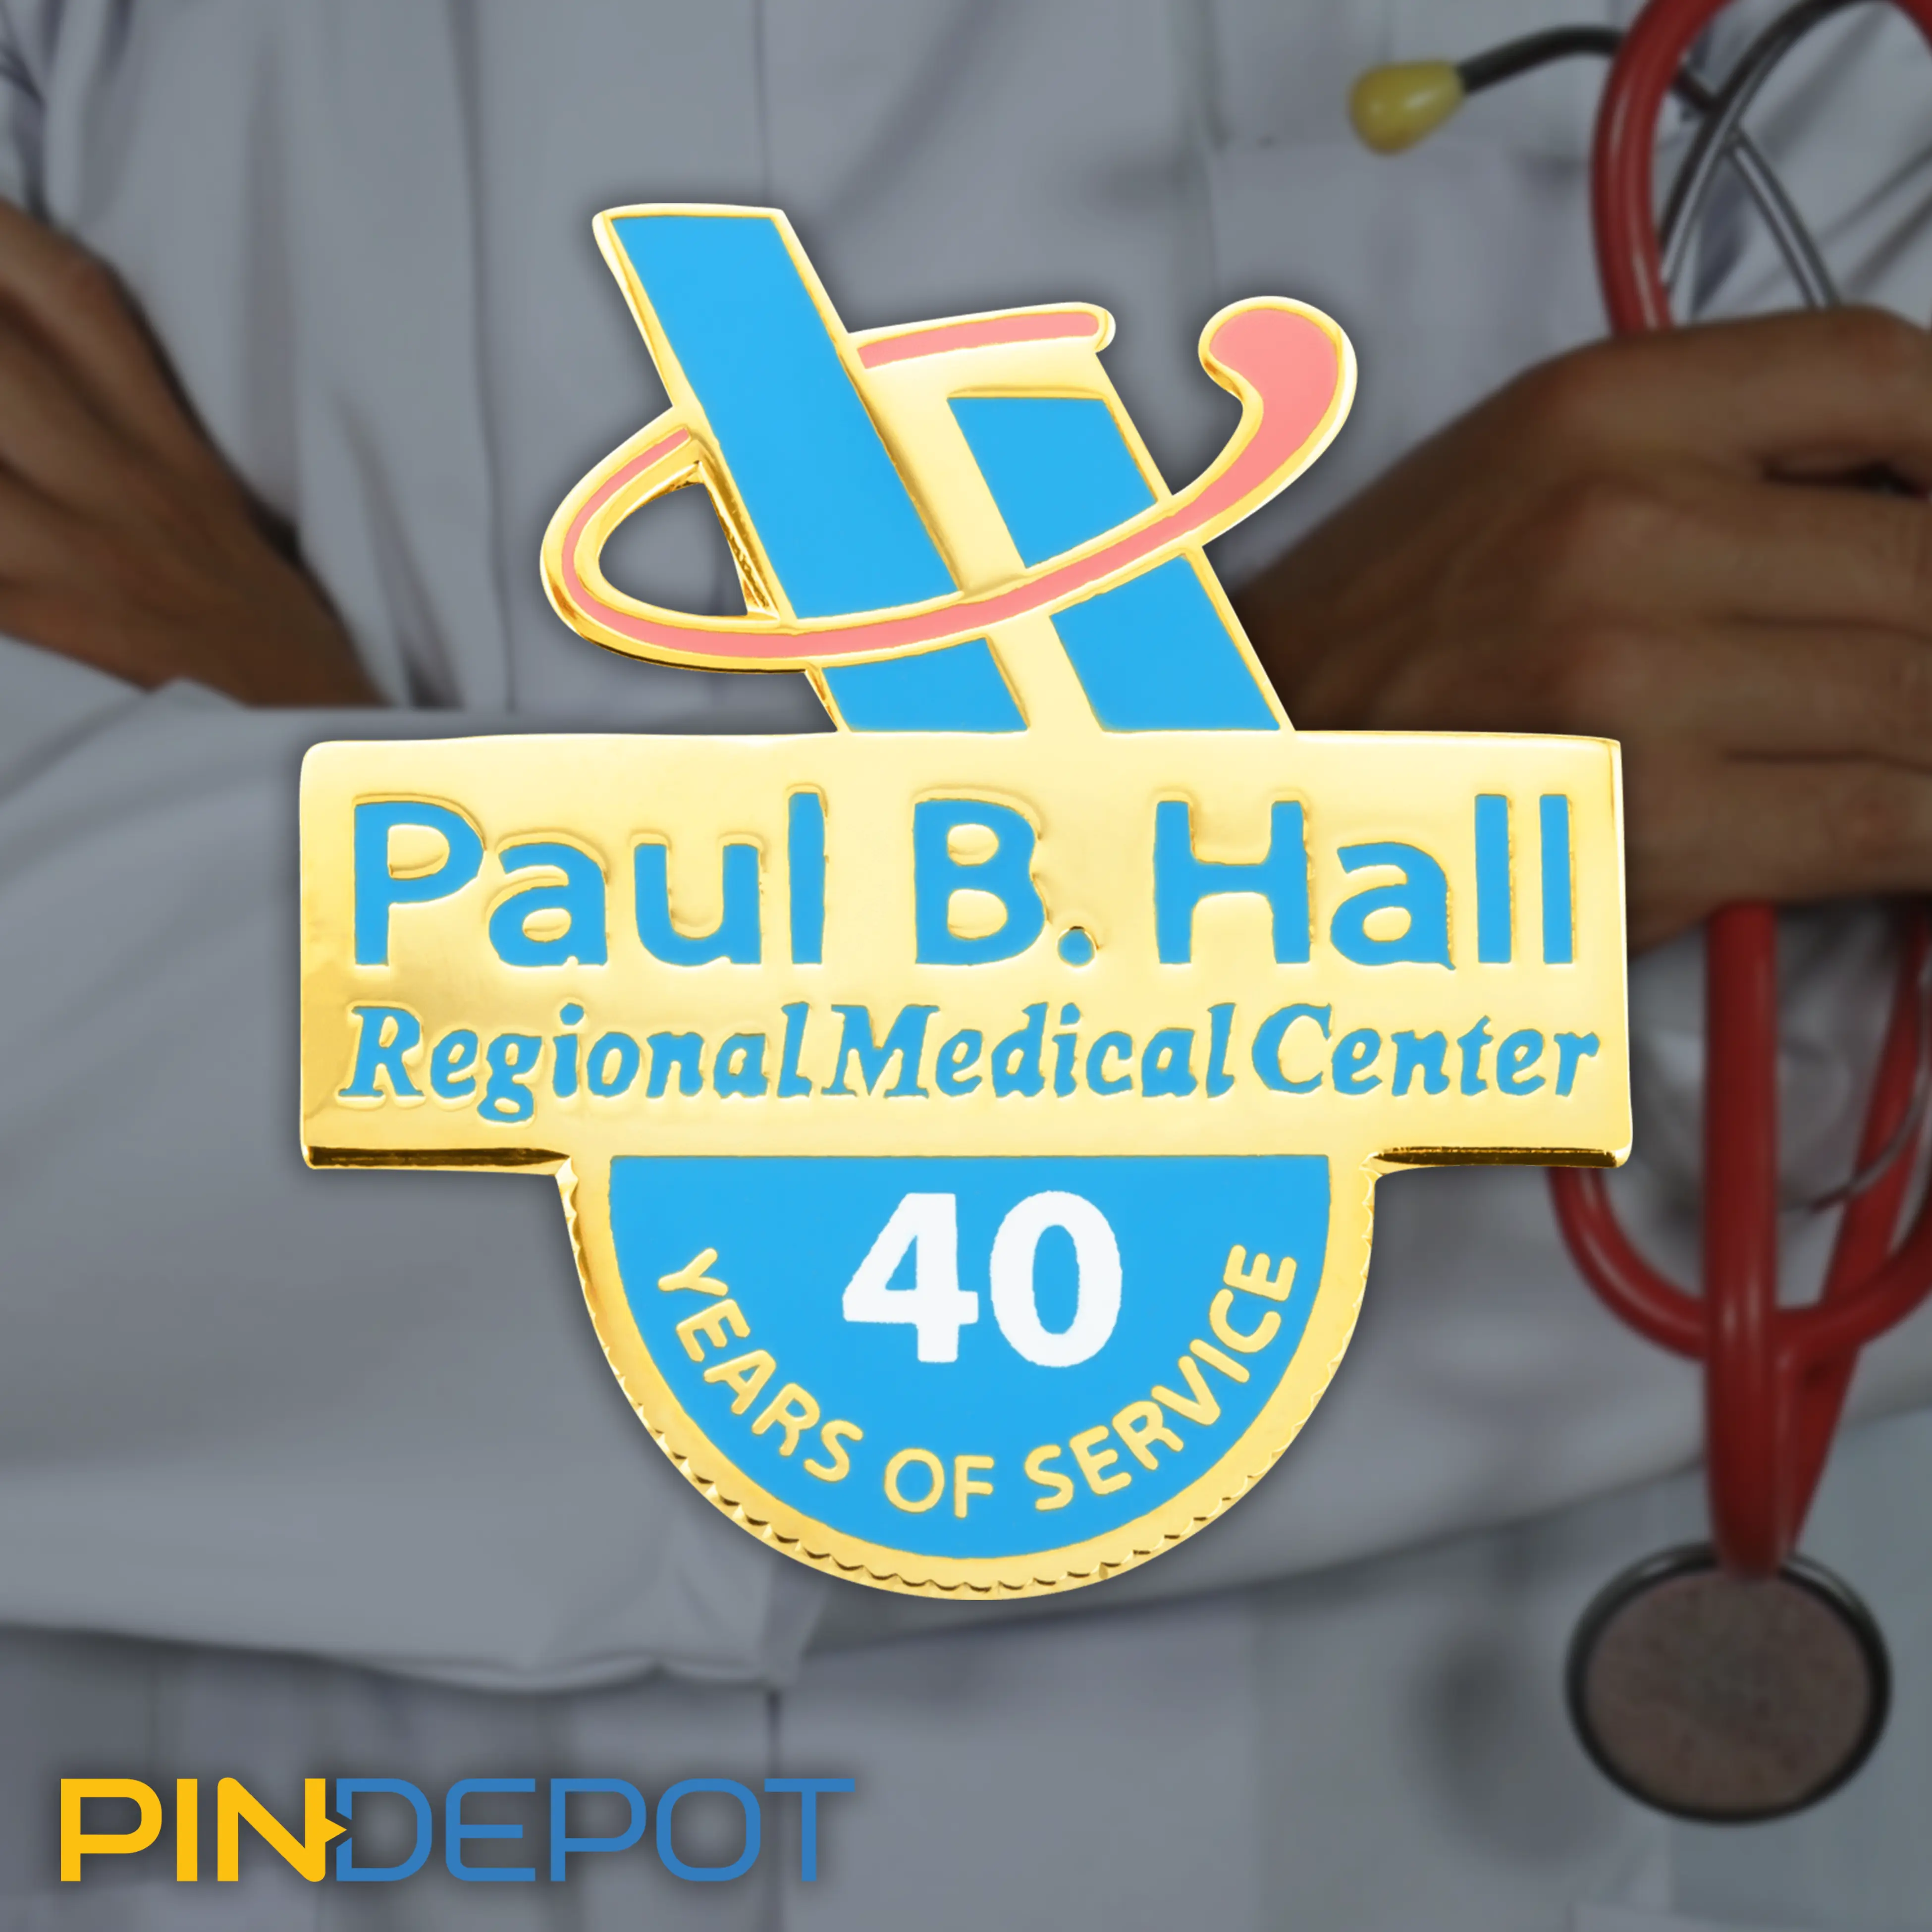 Paul B. Hall Regional Medical Center - 40 Years